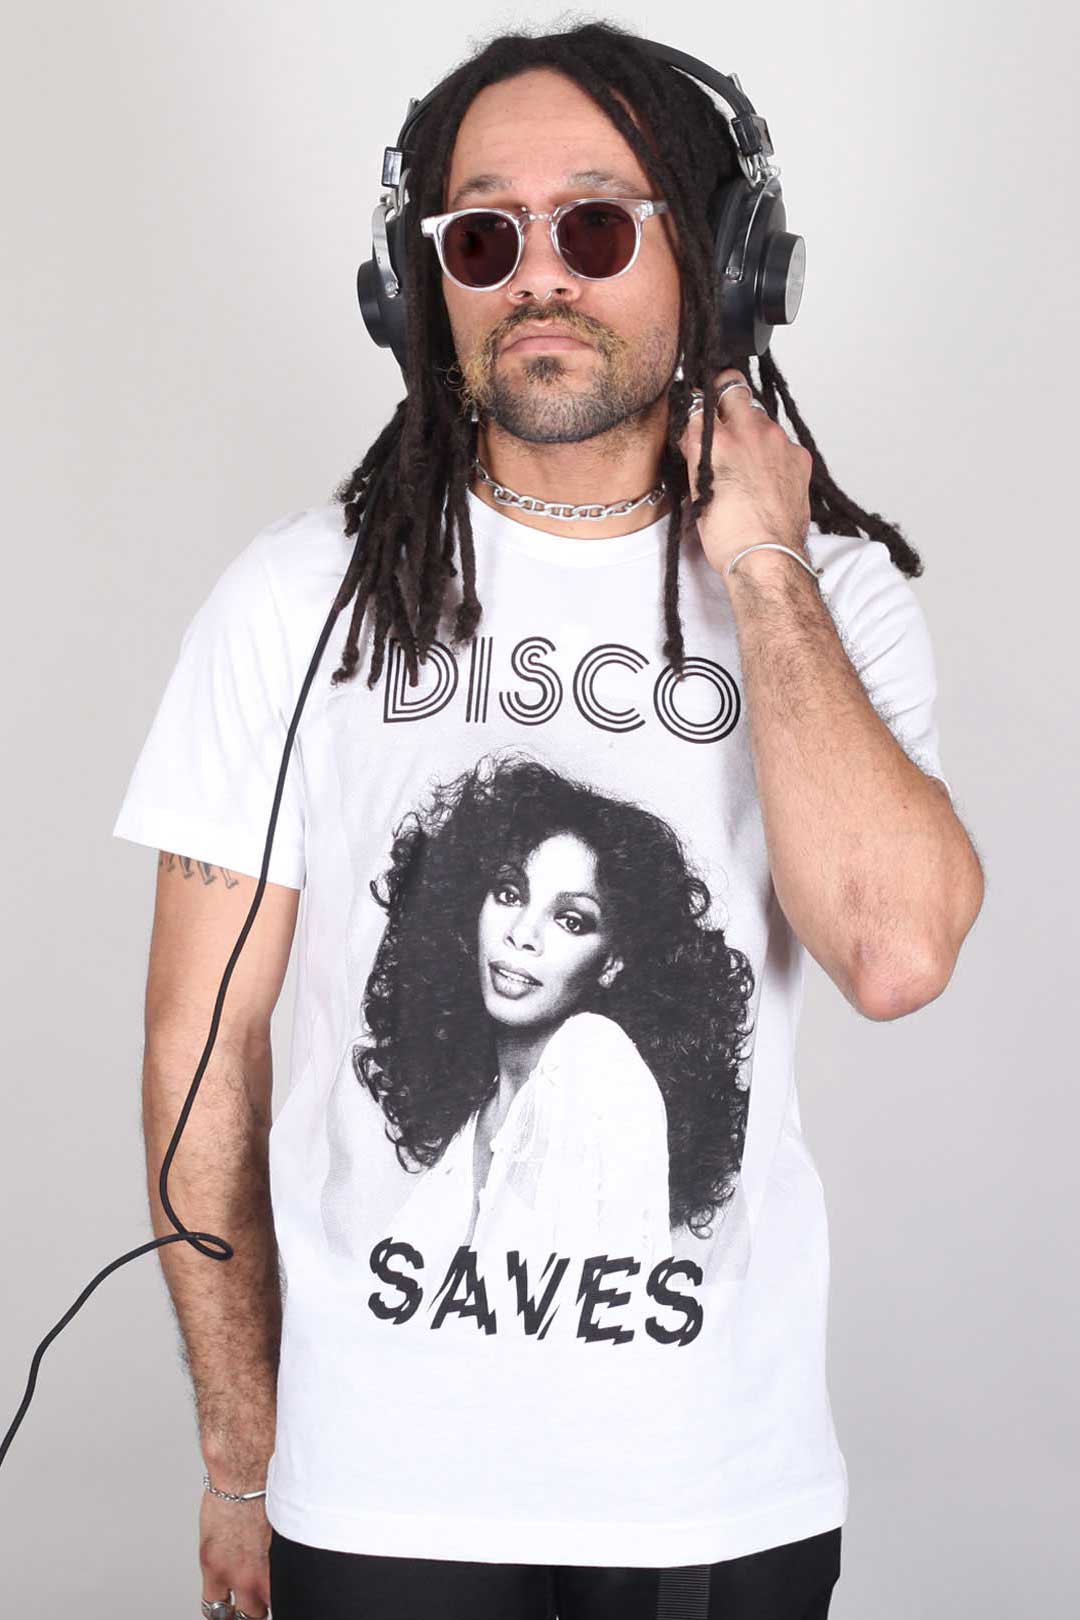 FM Donna Summer "Disco Saves" Tee - white